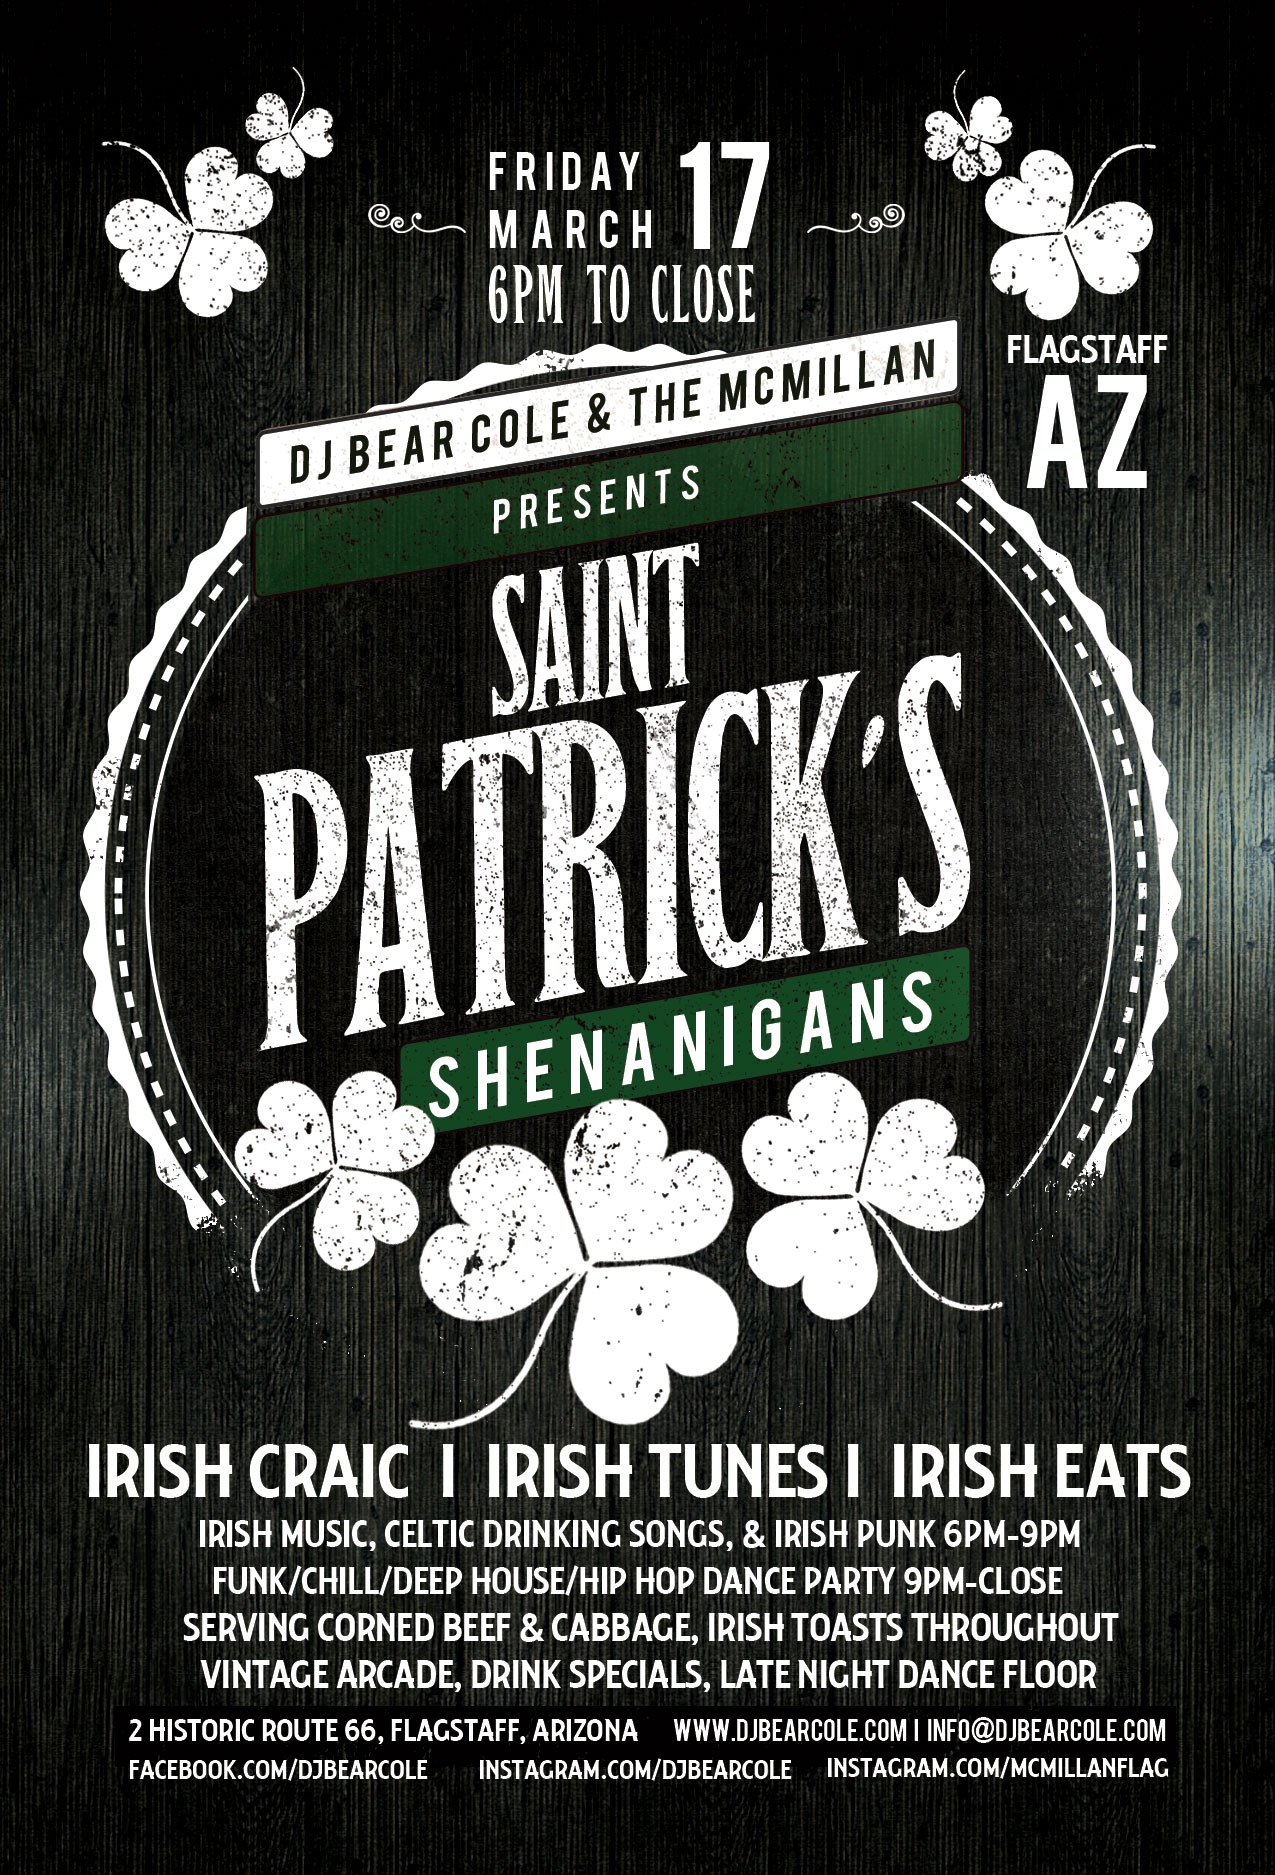 Saint Patrick's Shenanigans with DJ Bear Cole at The McMillan